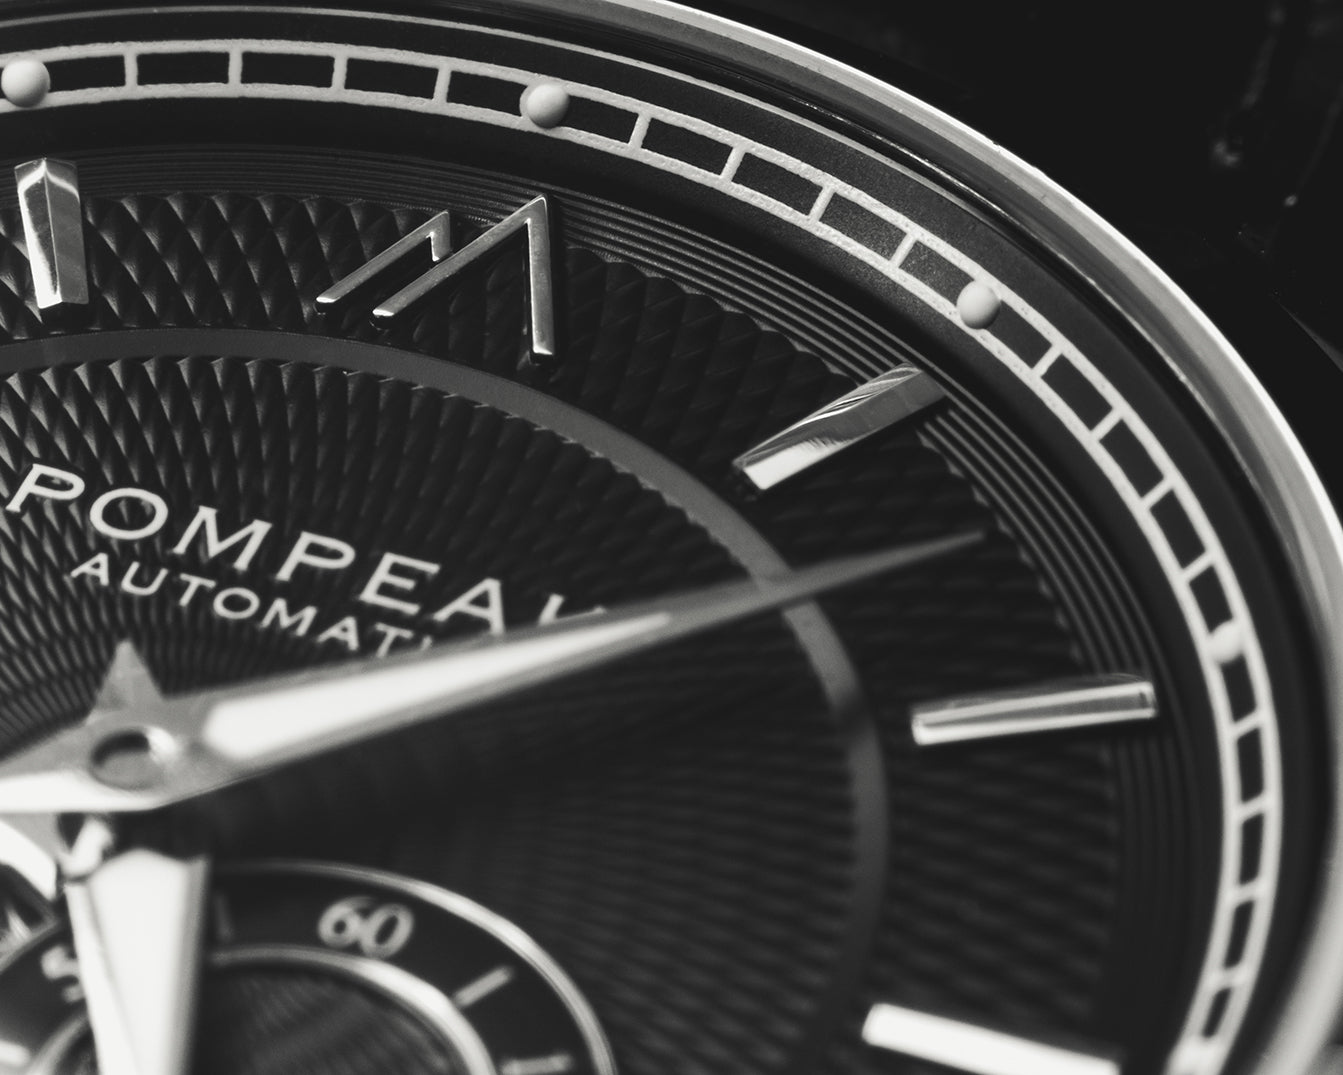 Pompeak automatic watch macro dial image.